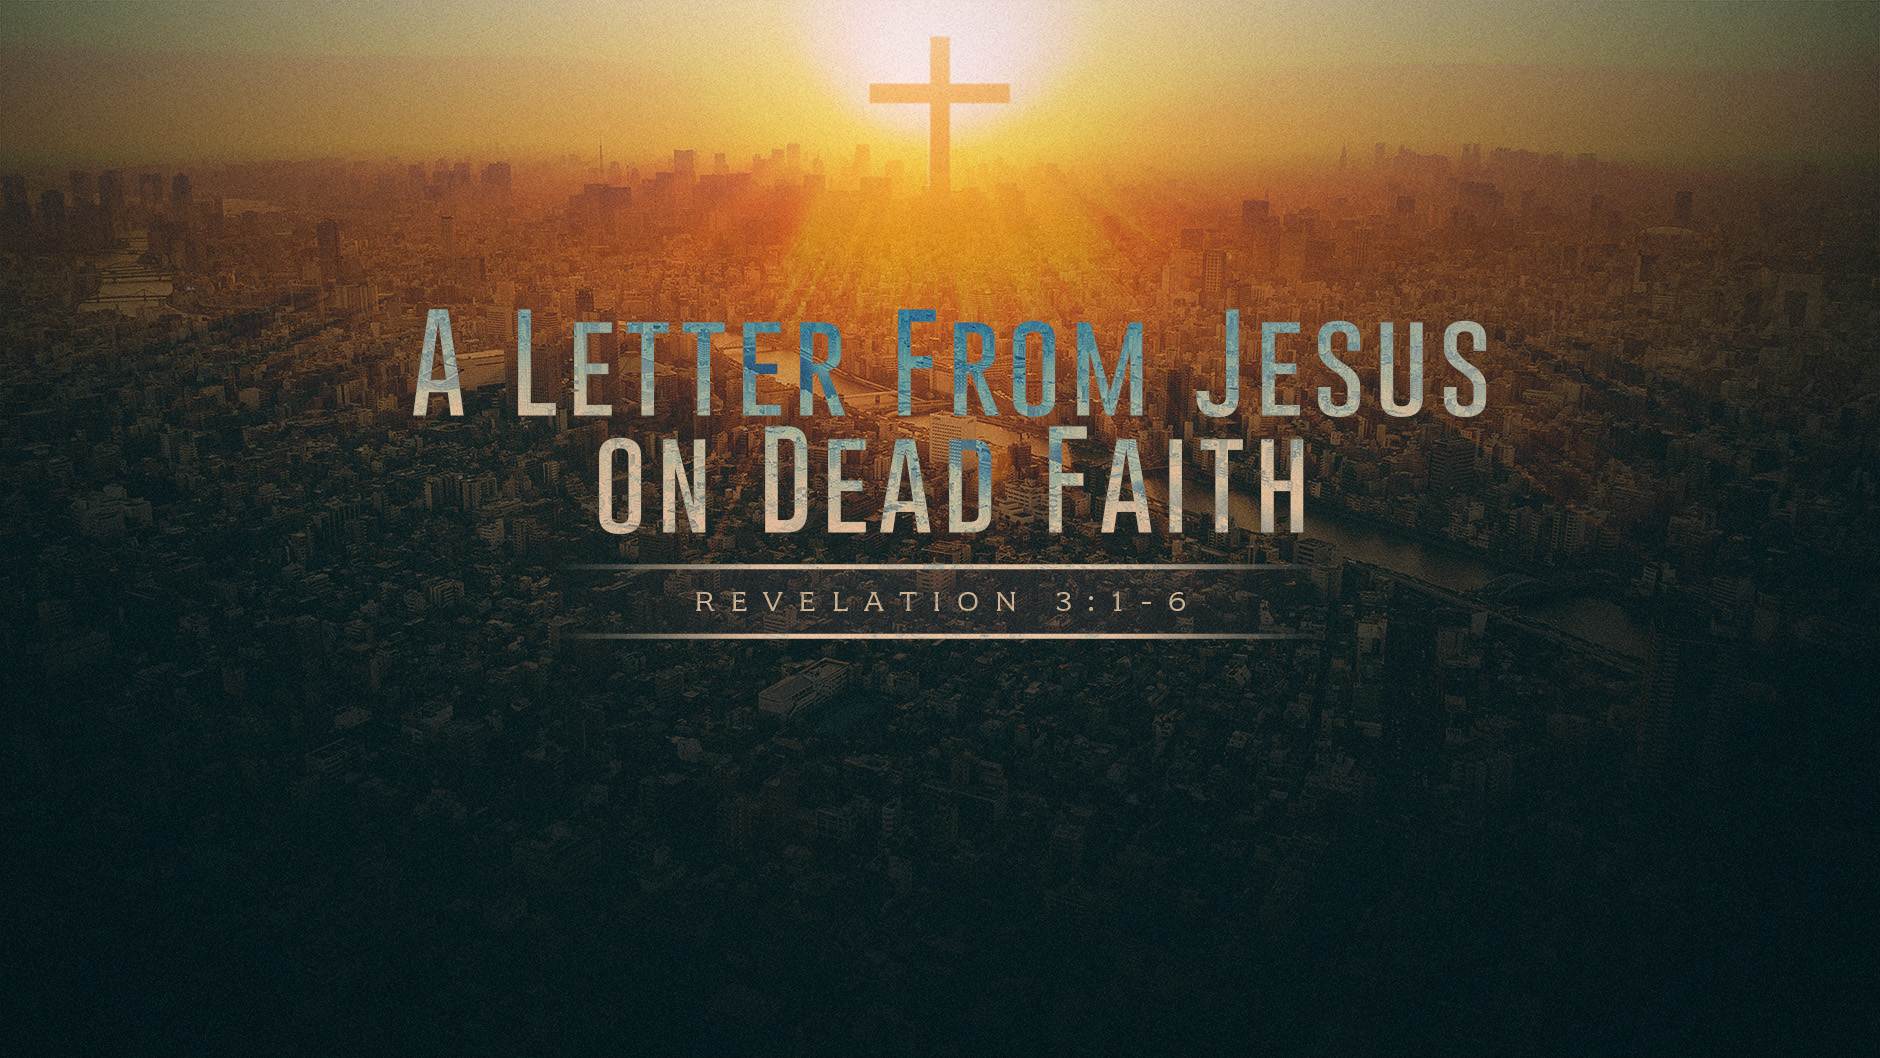 SERMON - A Letter From Jesus on Dead Faith